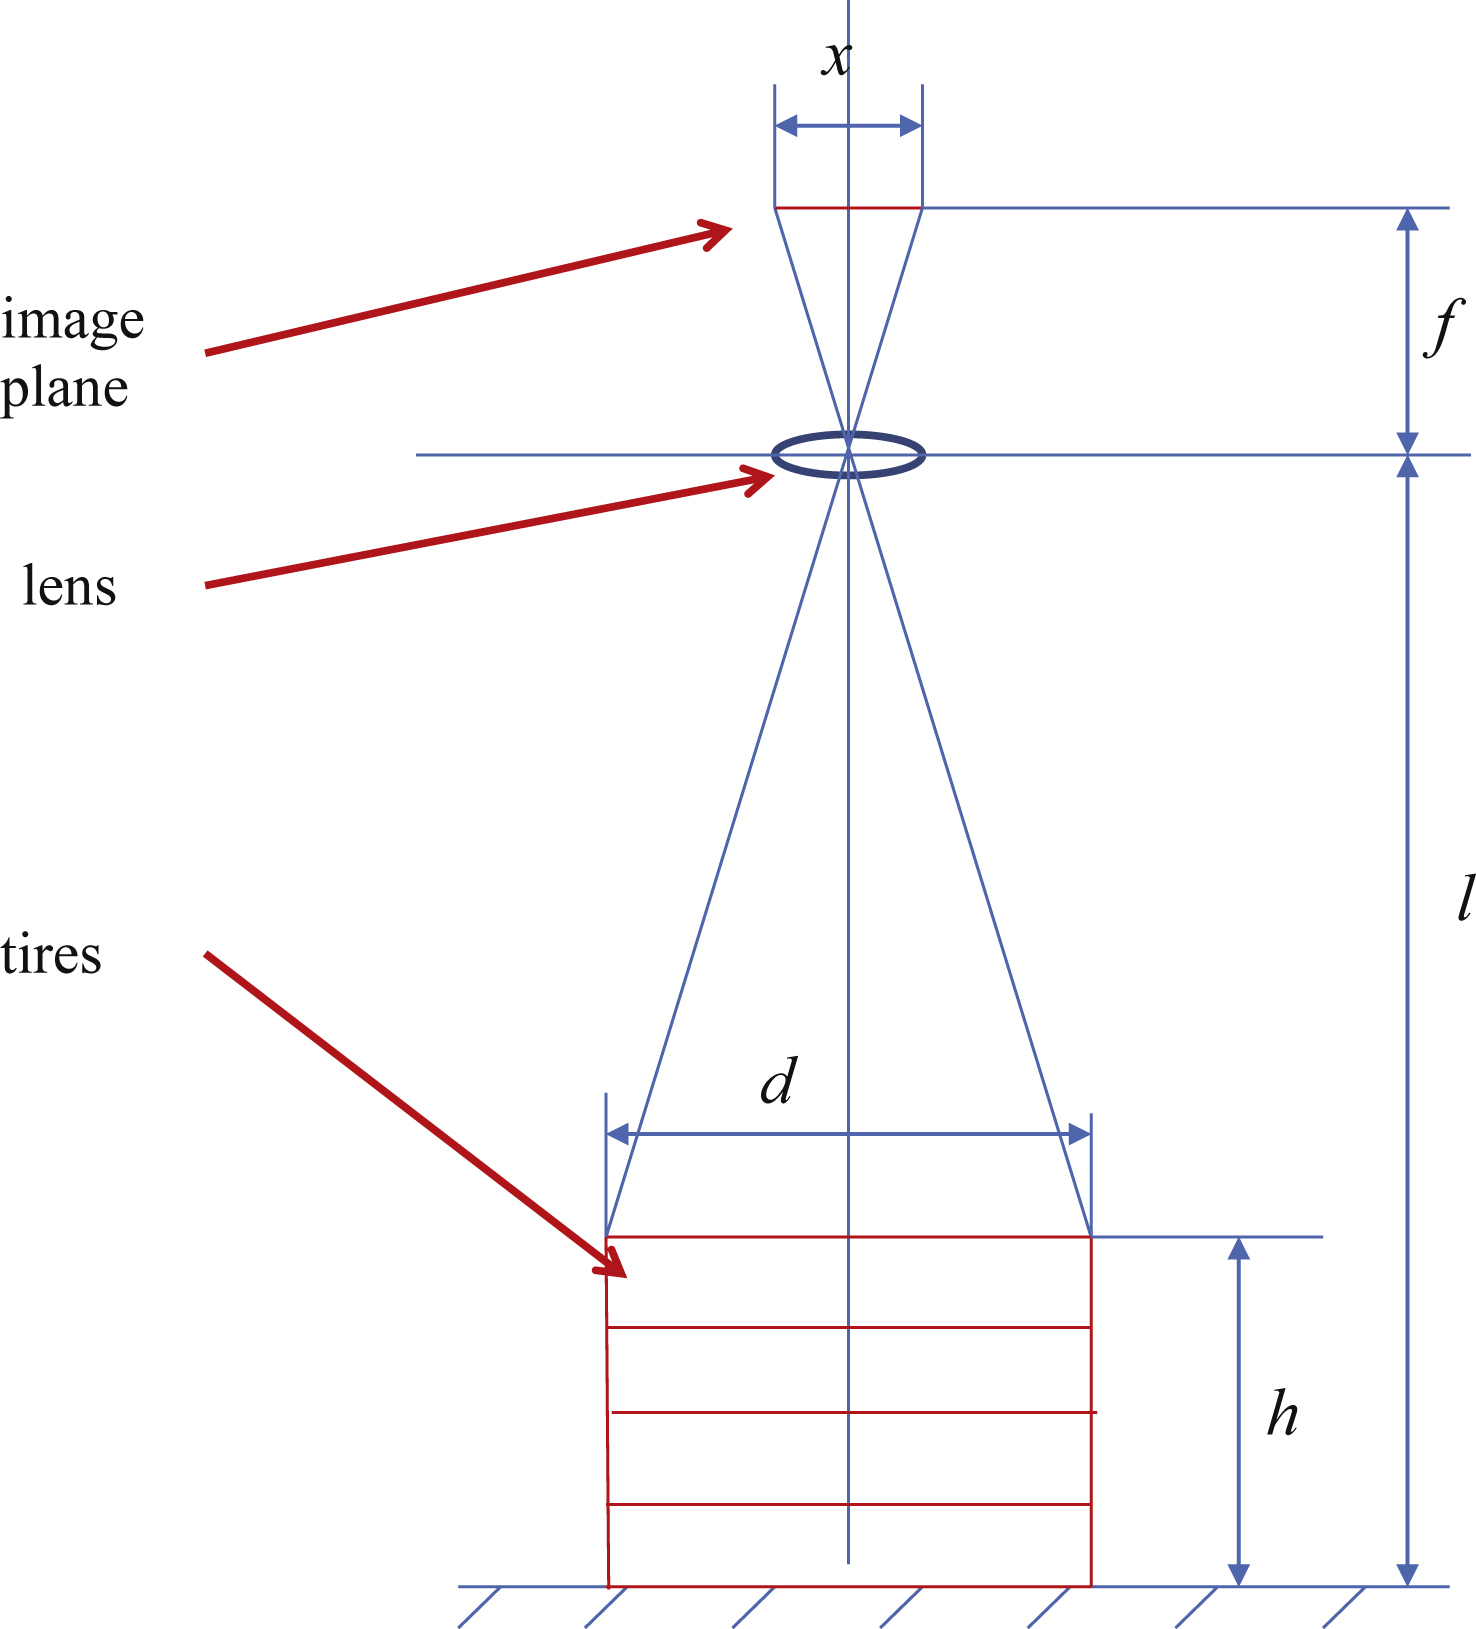 Diameter measurement schematic diagram by the pinhole camera model.